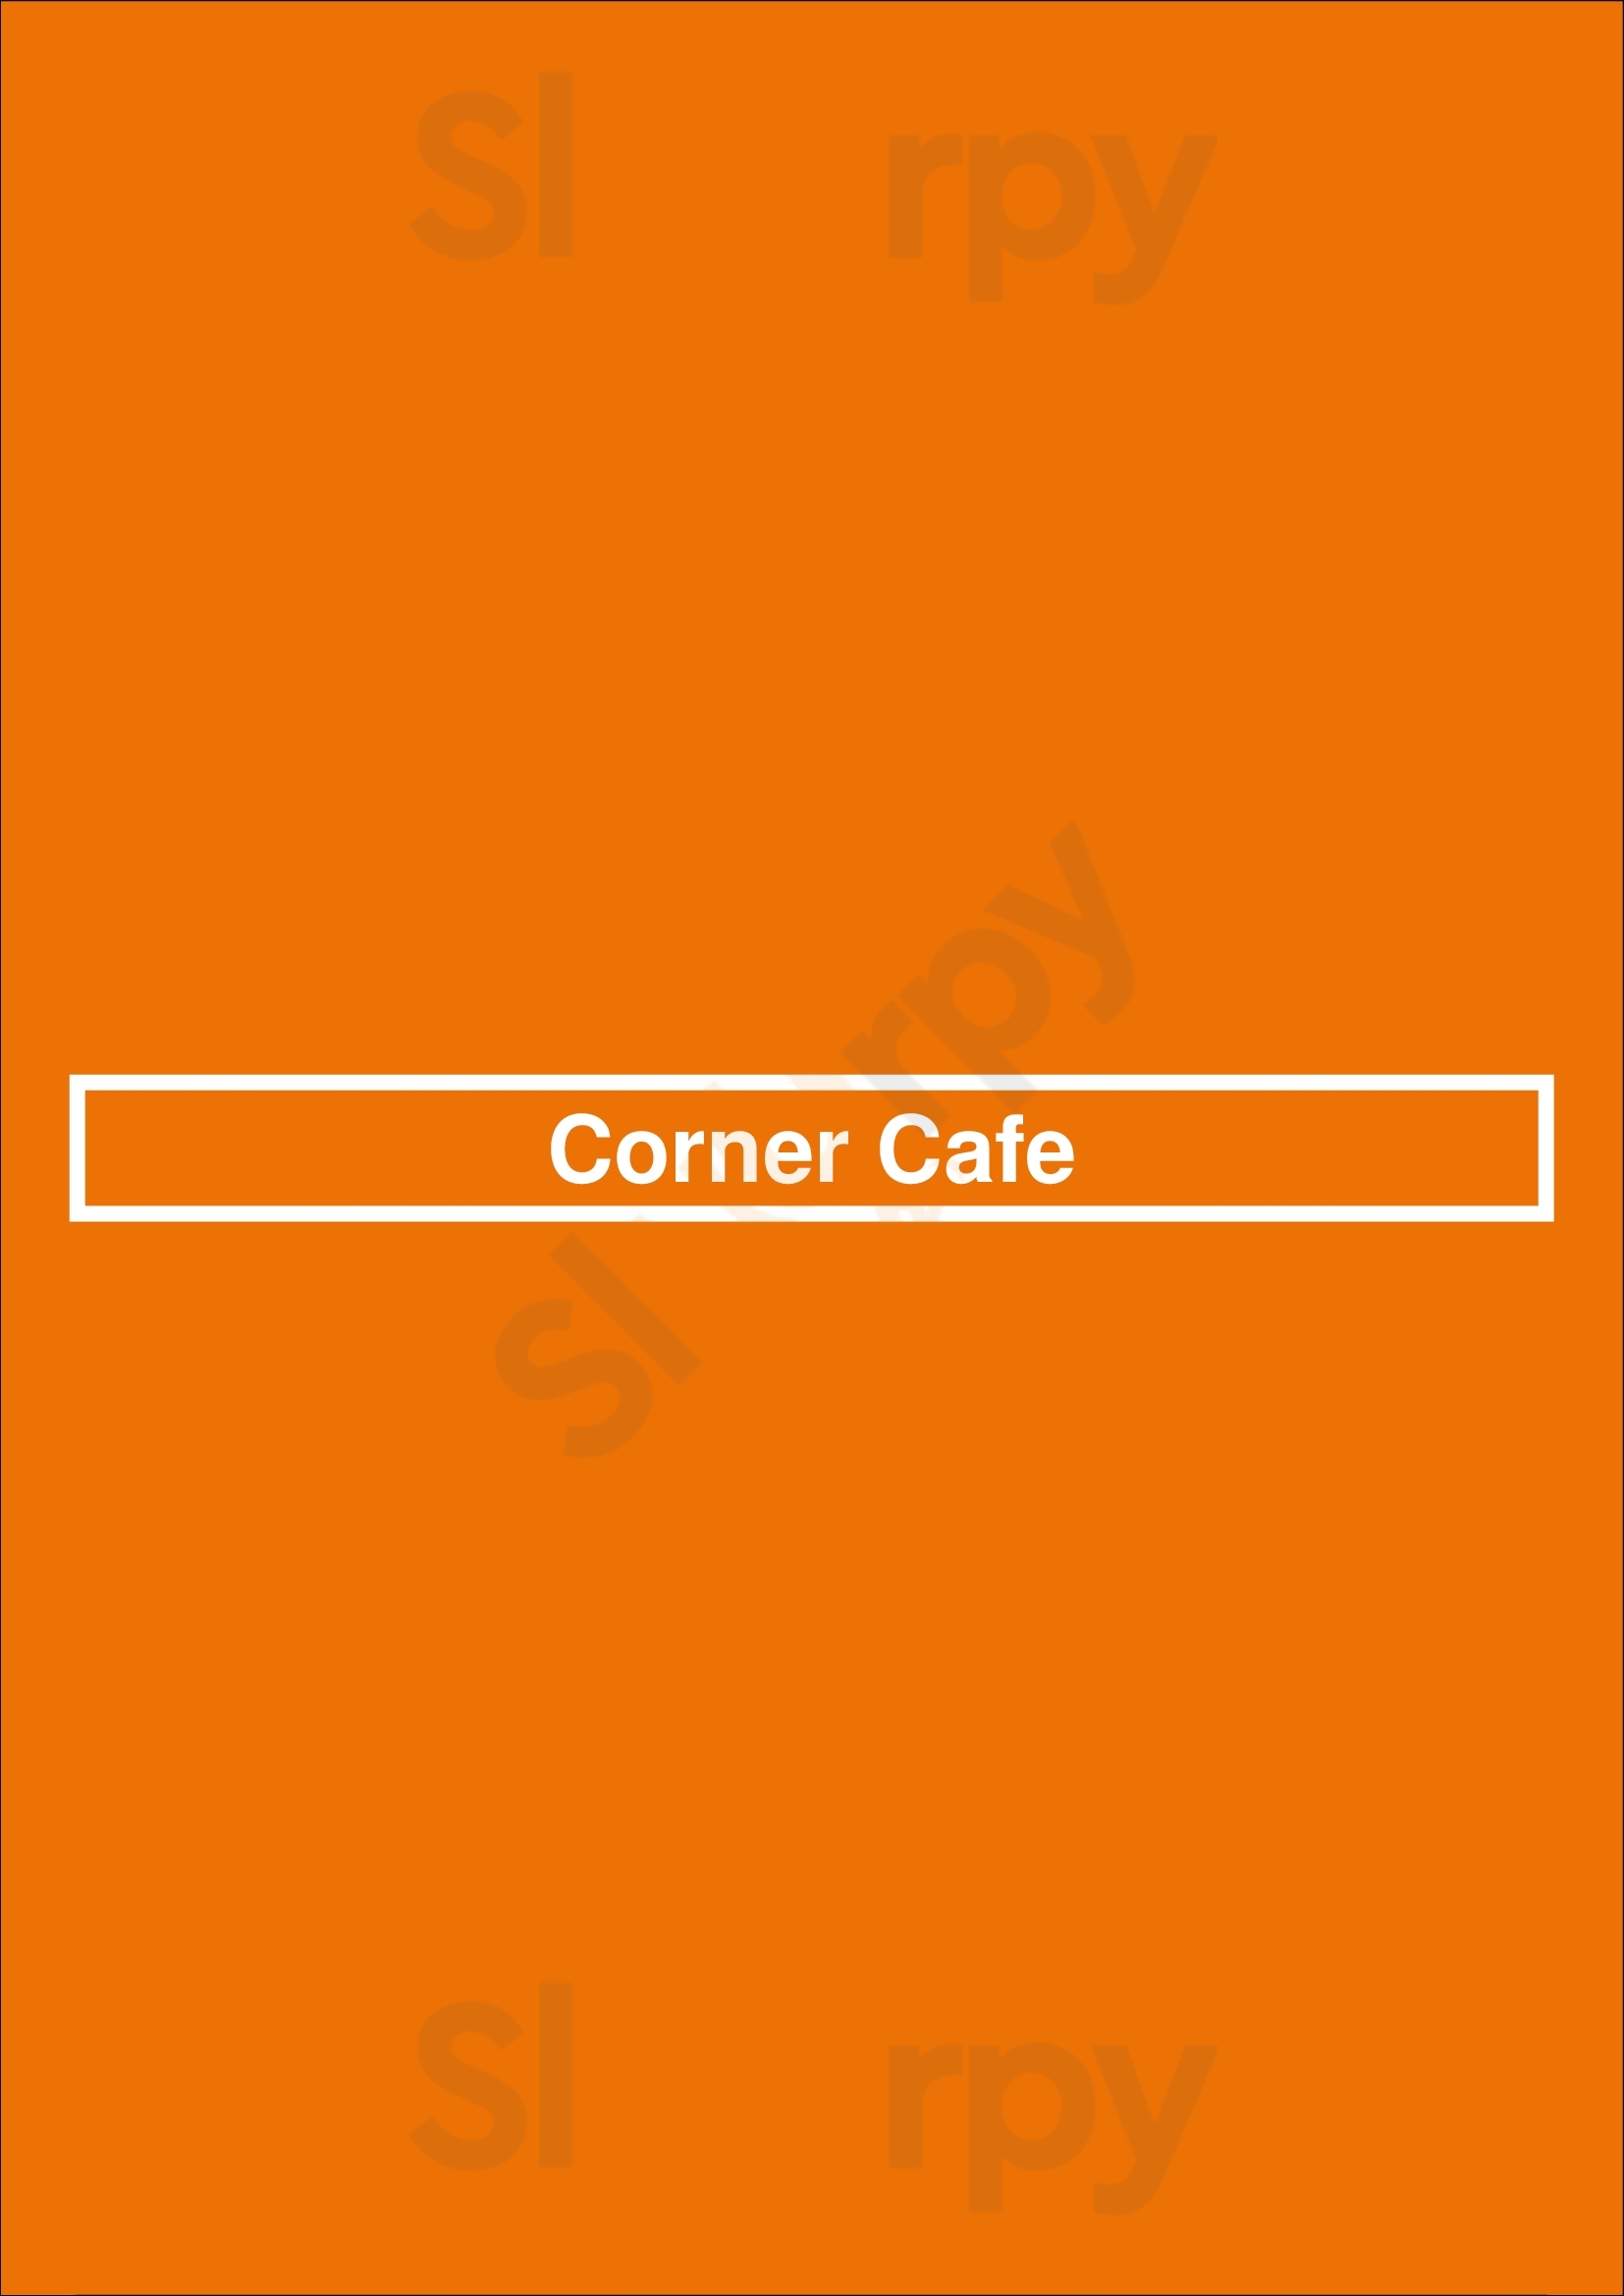 Corner Cafe London Menu - 1